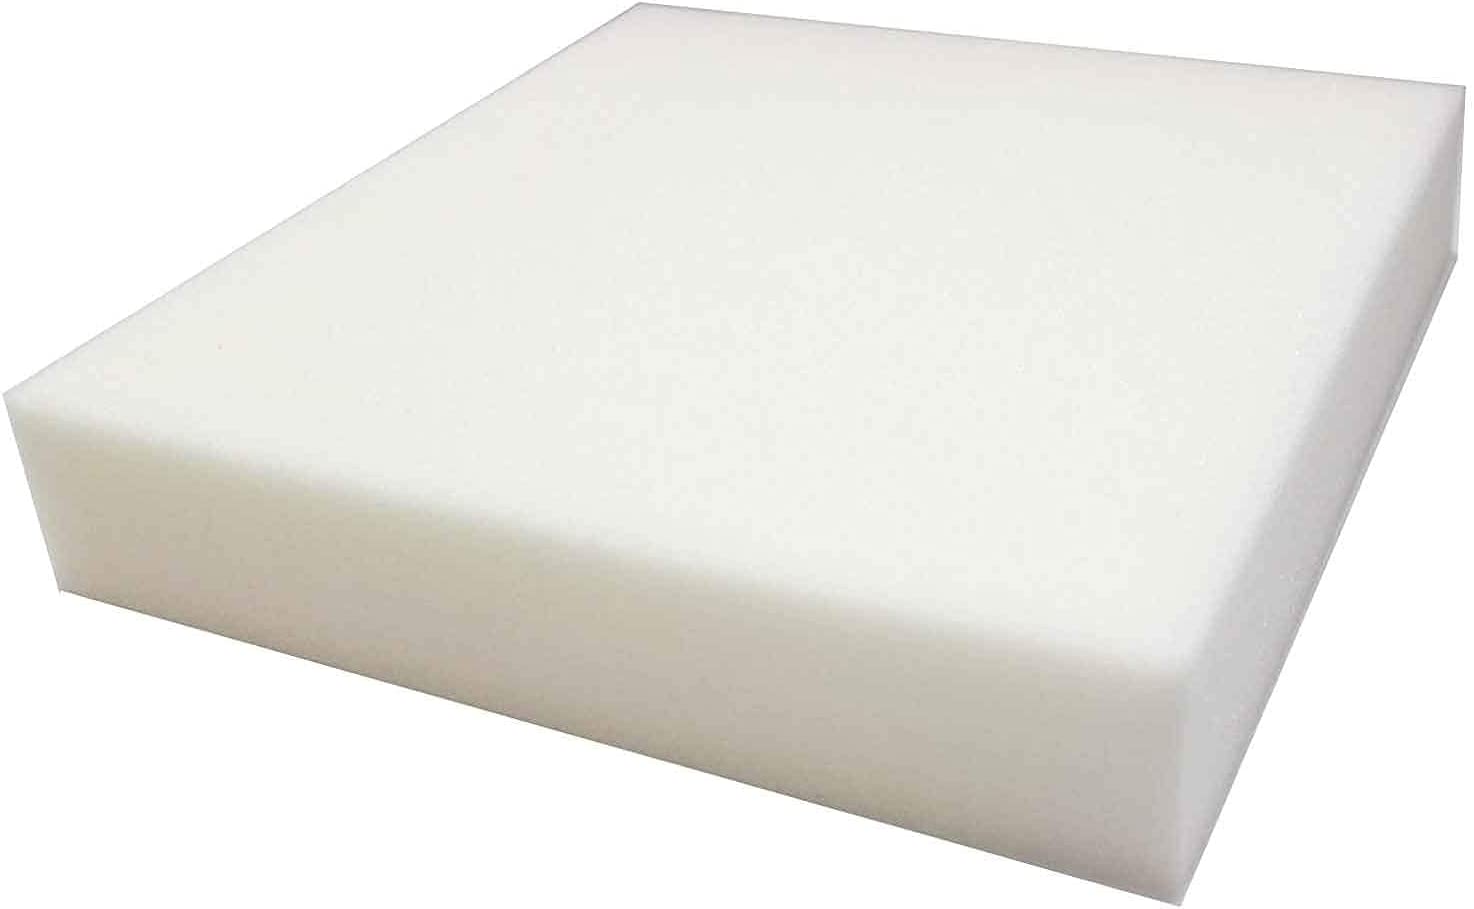 Mybecca 1 x 24 x 24 High Density Upholstery Foam Cushion (Seat